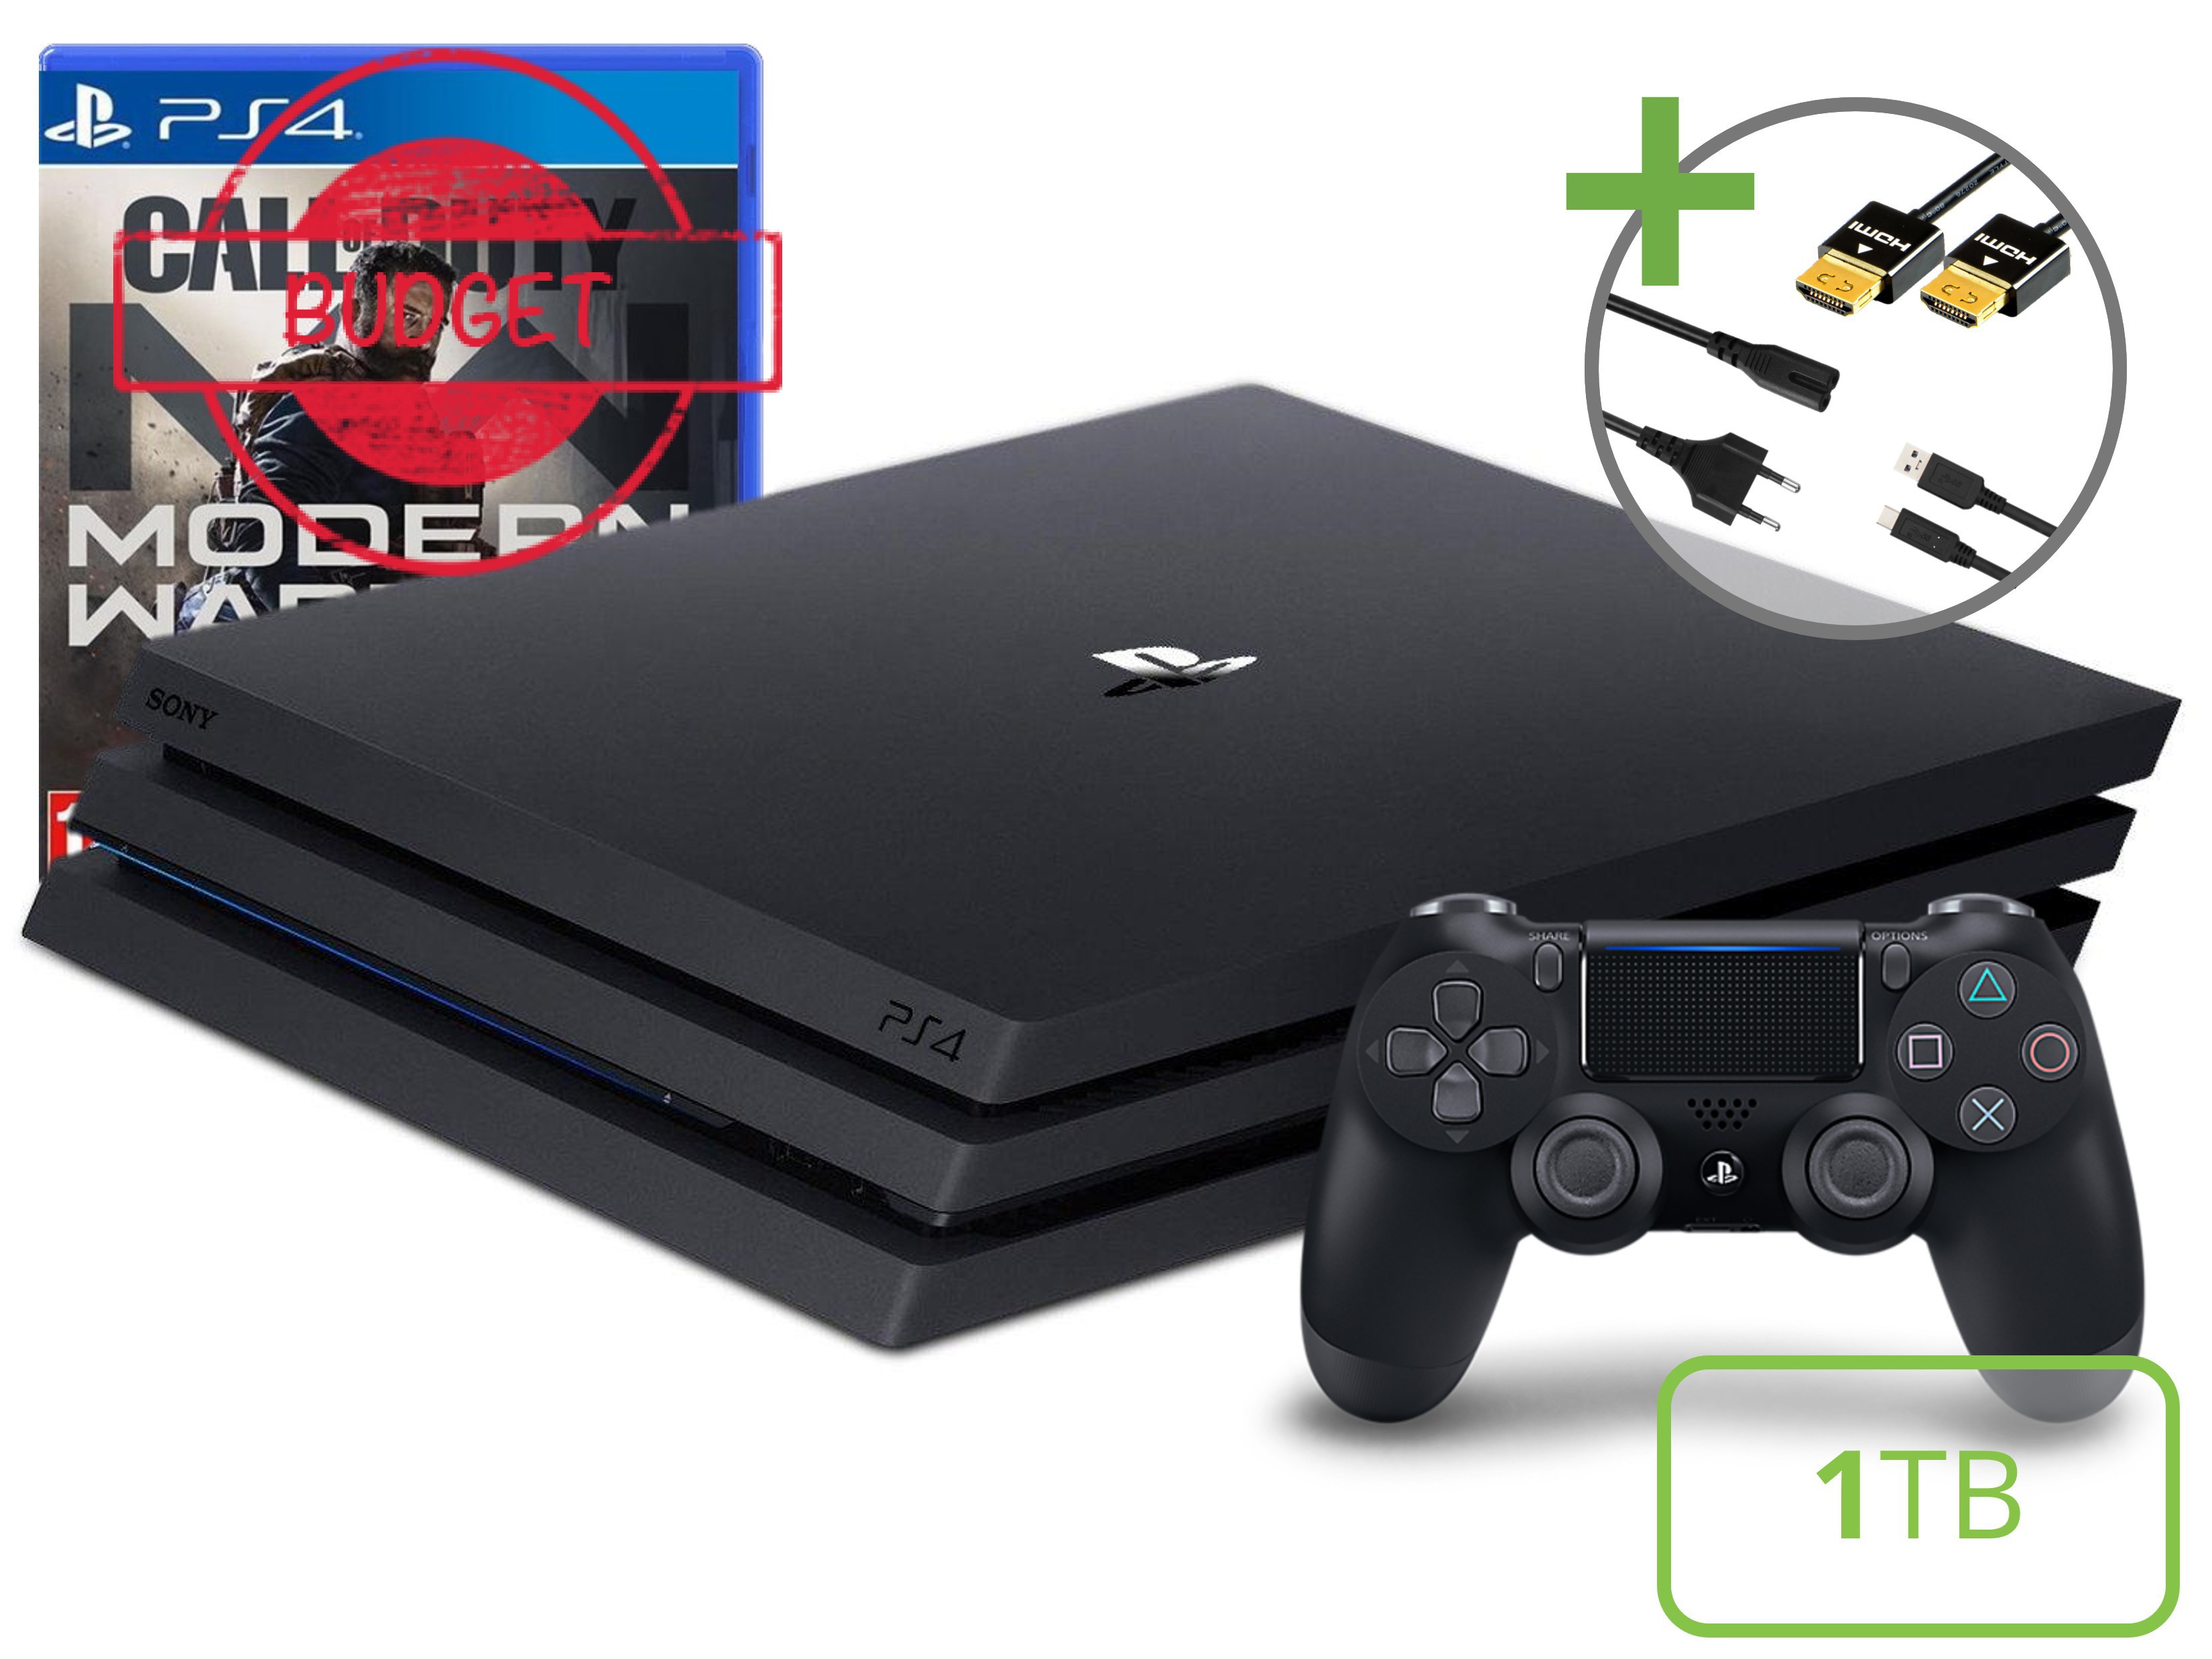 Sony PlayStation 4 Pro Starter Pack - 1TB Call of Duty Modern Warfare Edition - Budget - Playstation 4 Hardware